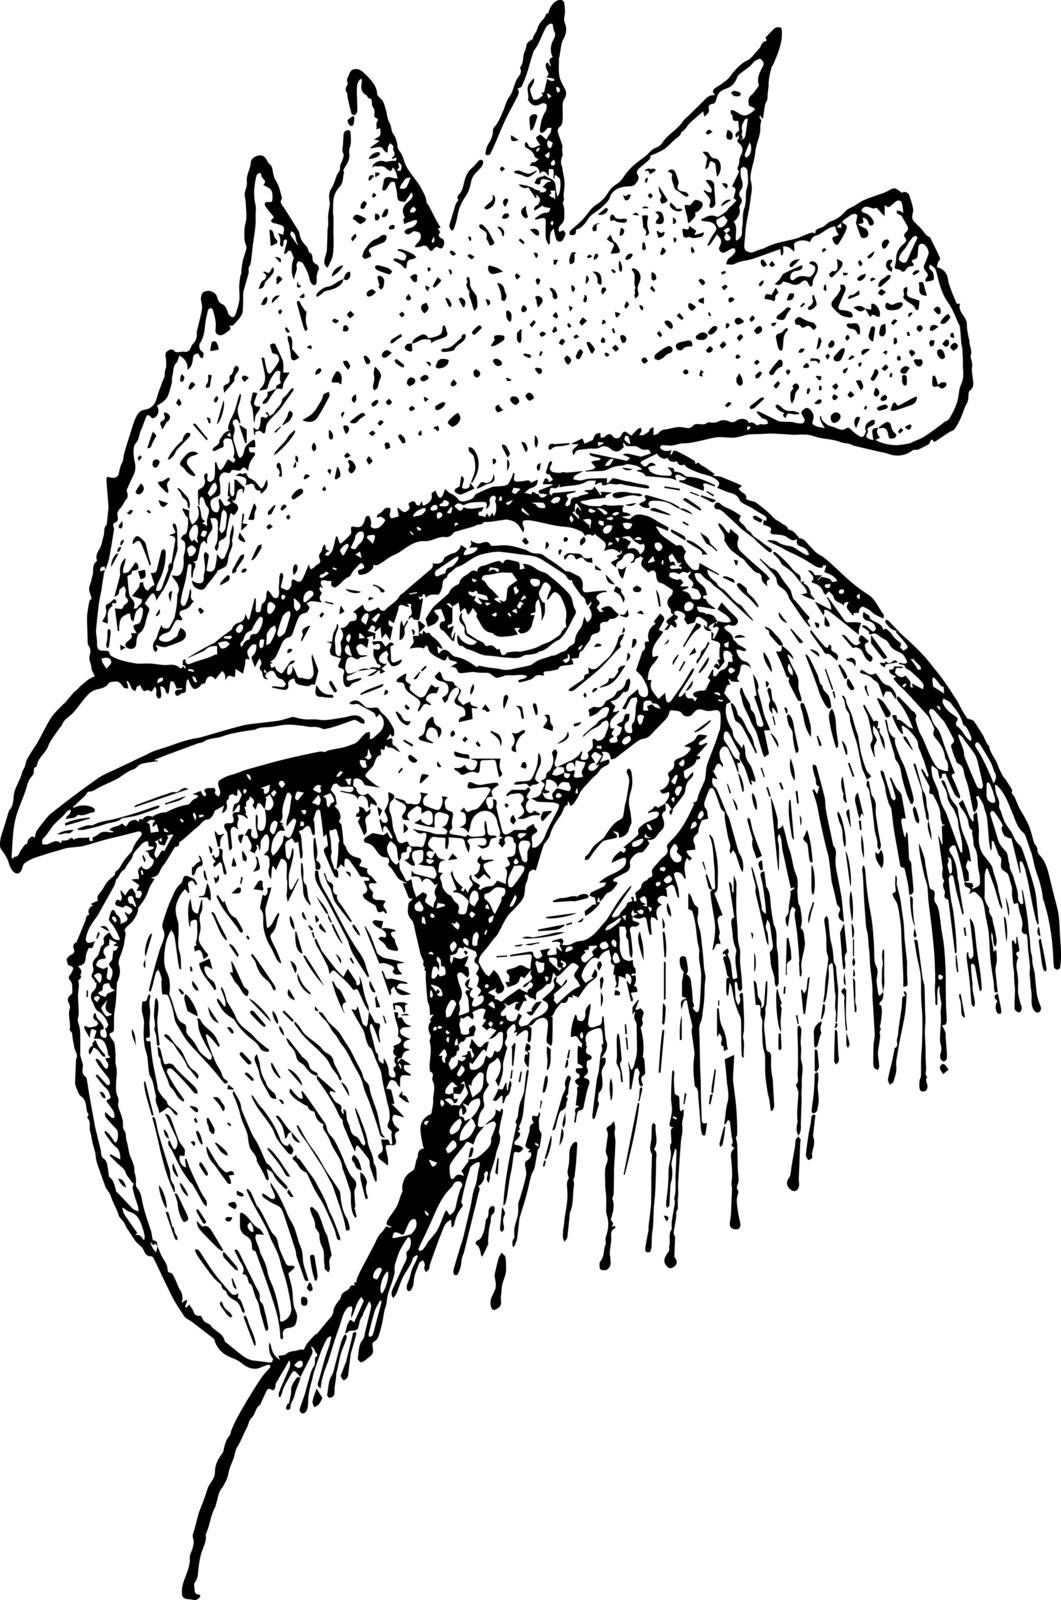 Single Comb Chicken Head vintage illustration. by Morphart